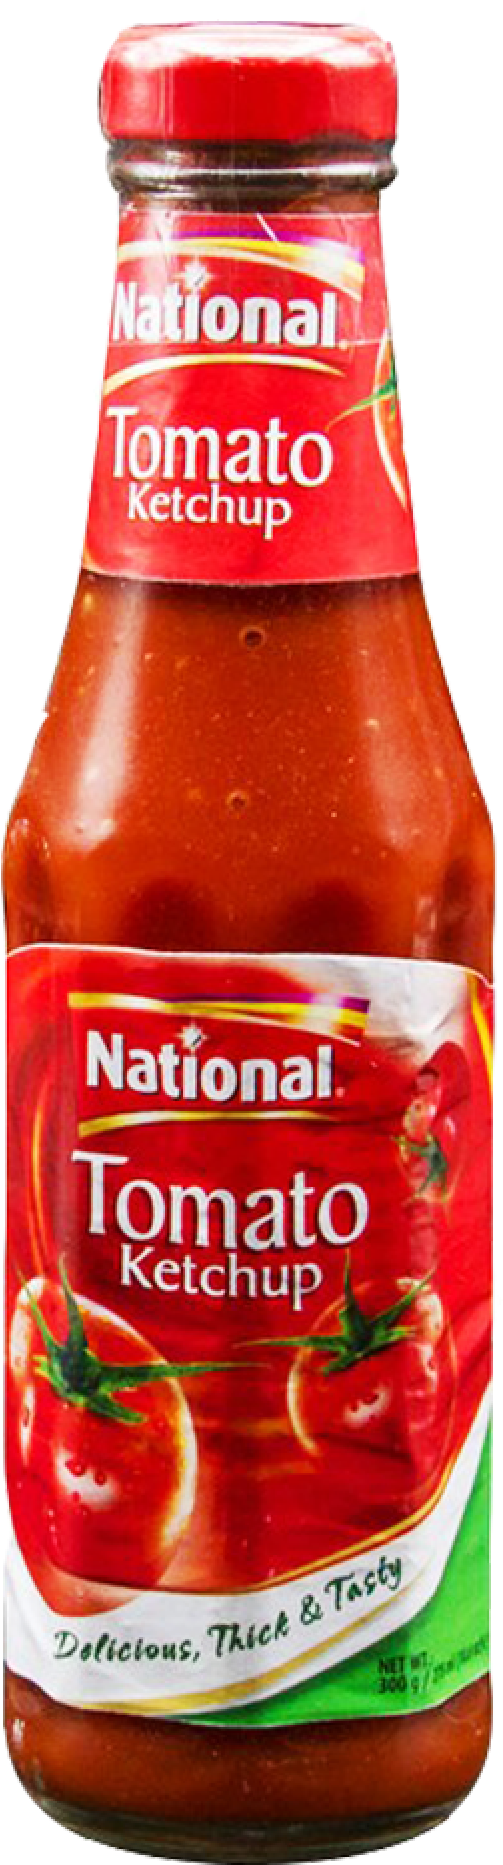 National Tomato Ketchup Bottle PNG image